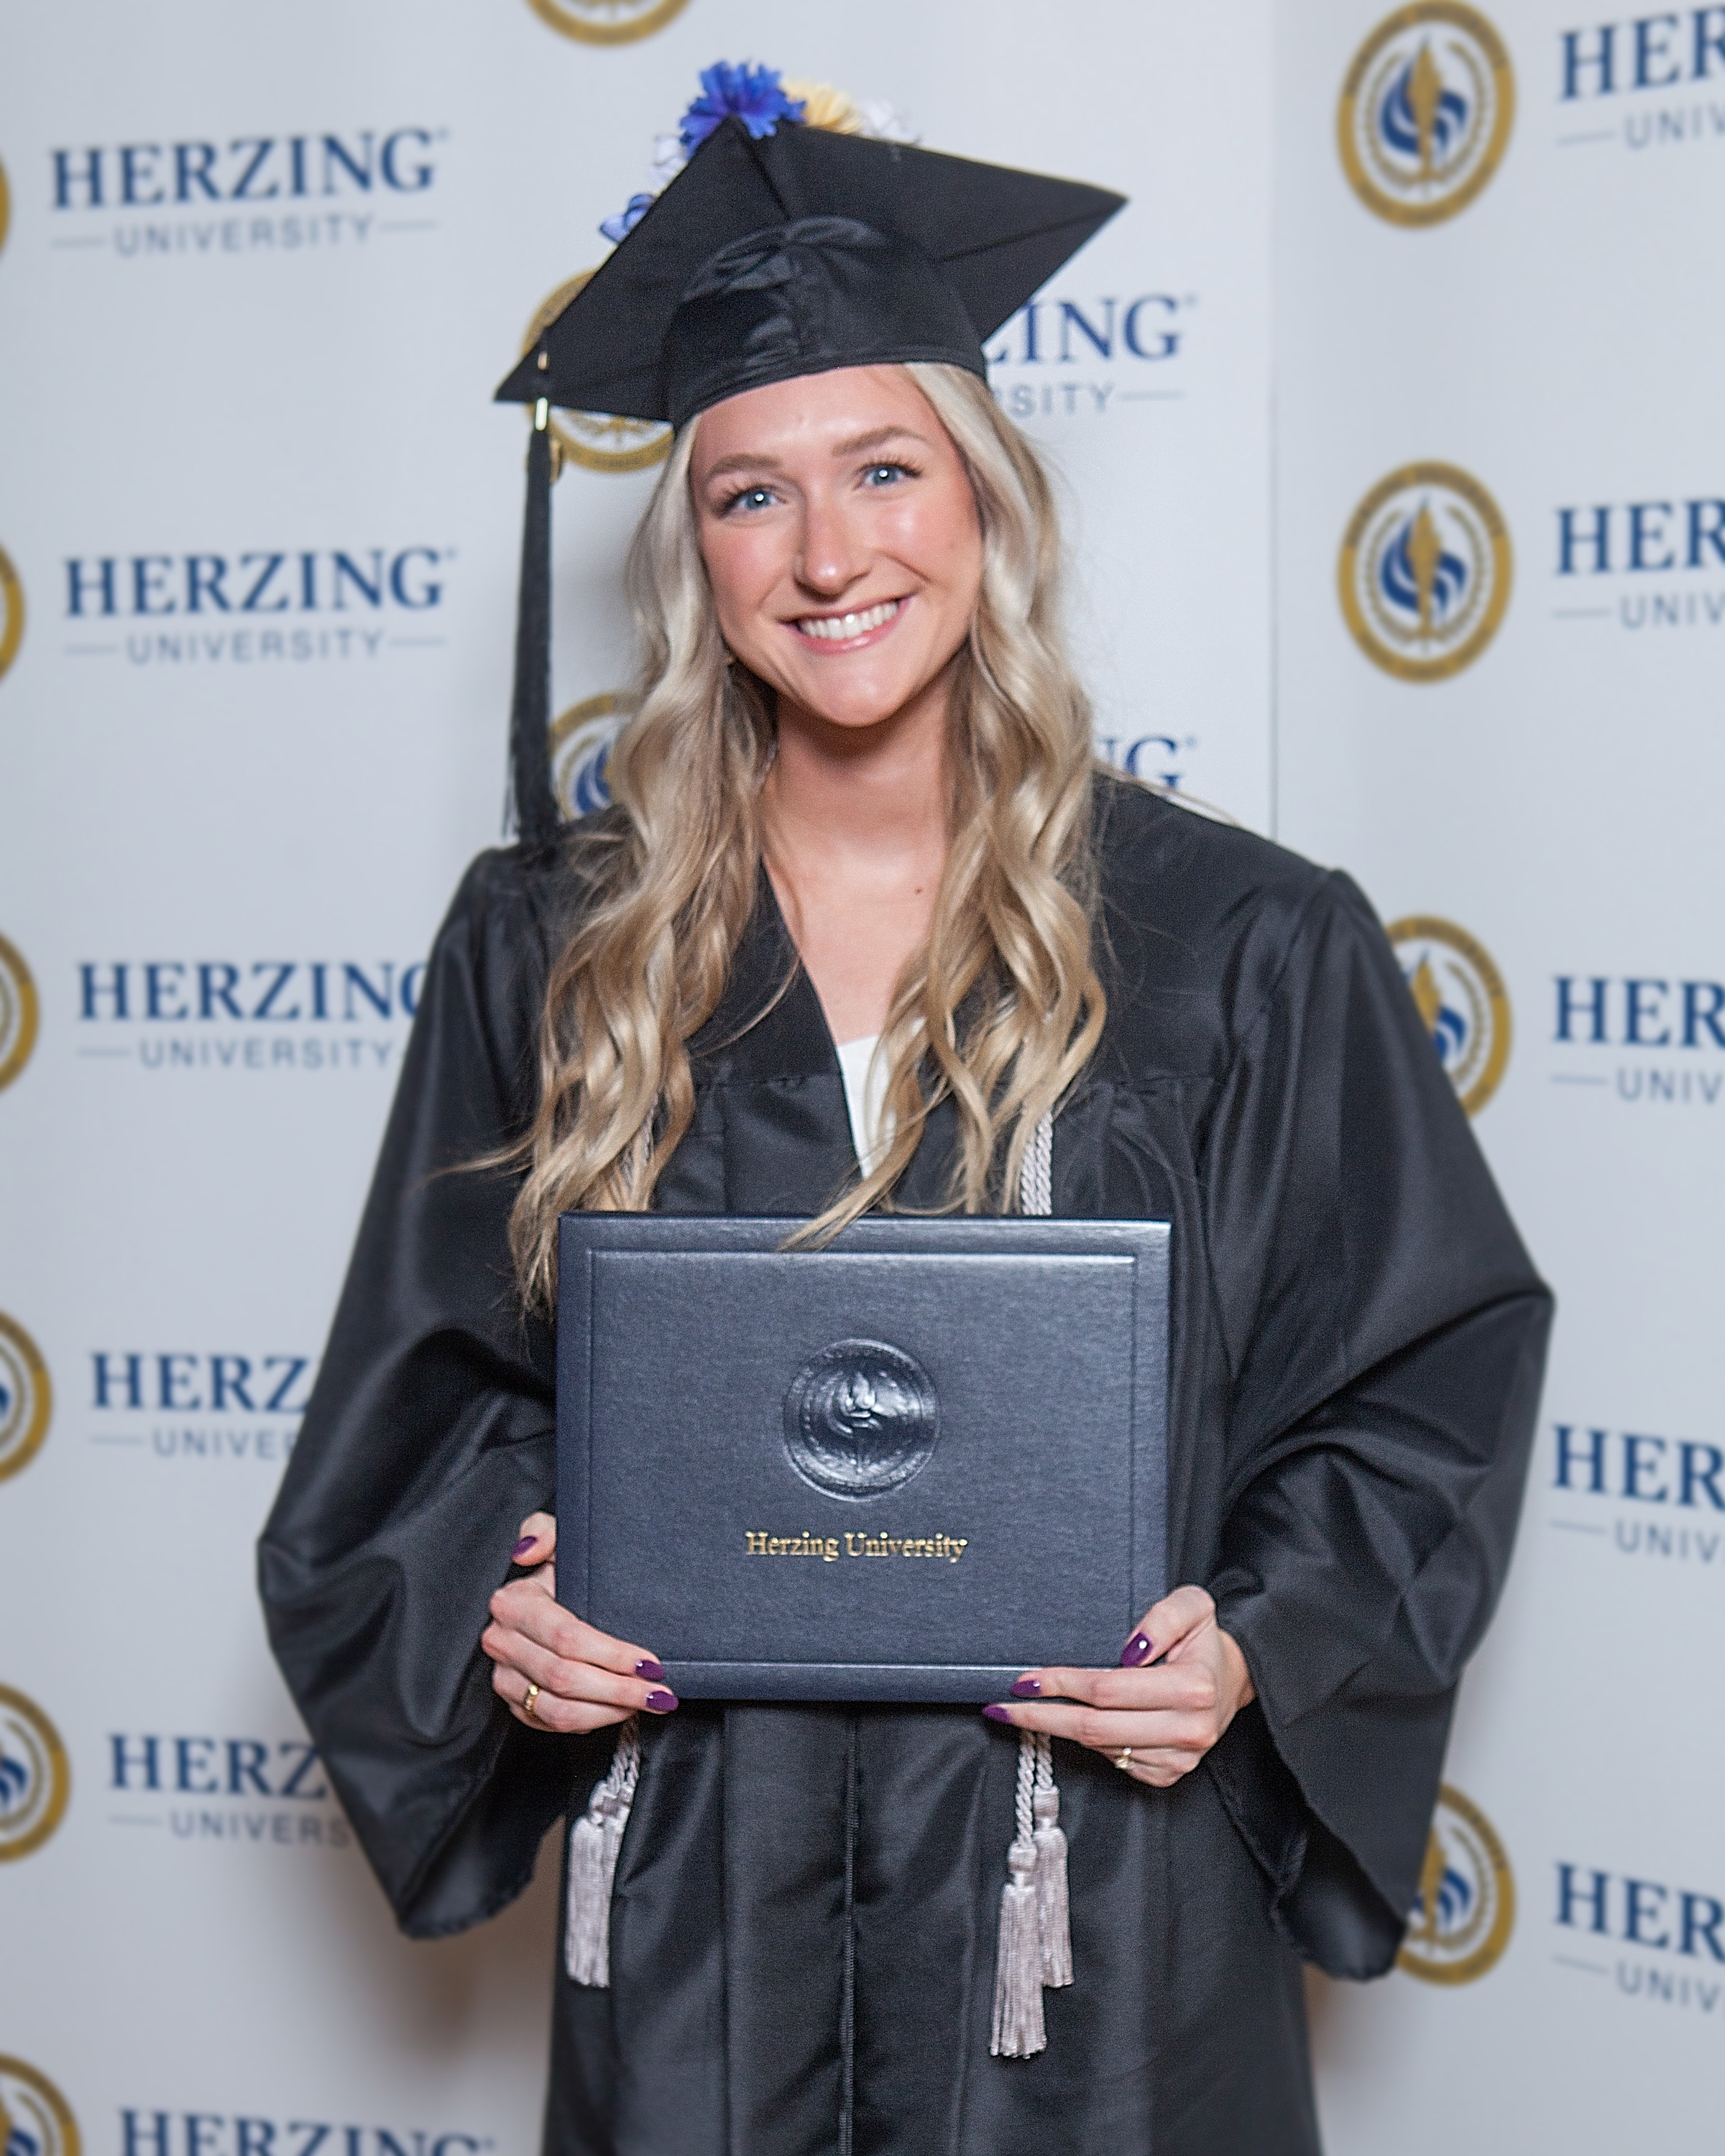 Herzing graduate smiling and holding degree